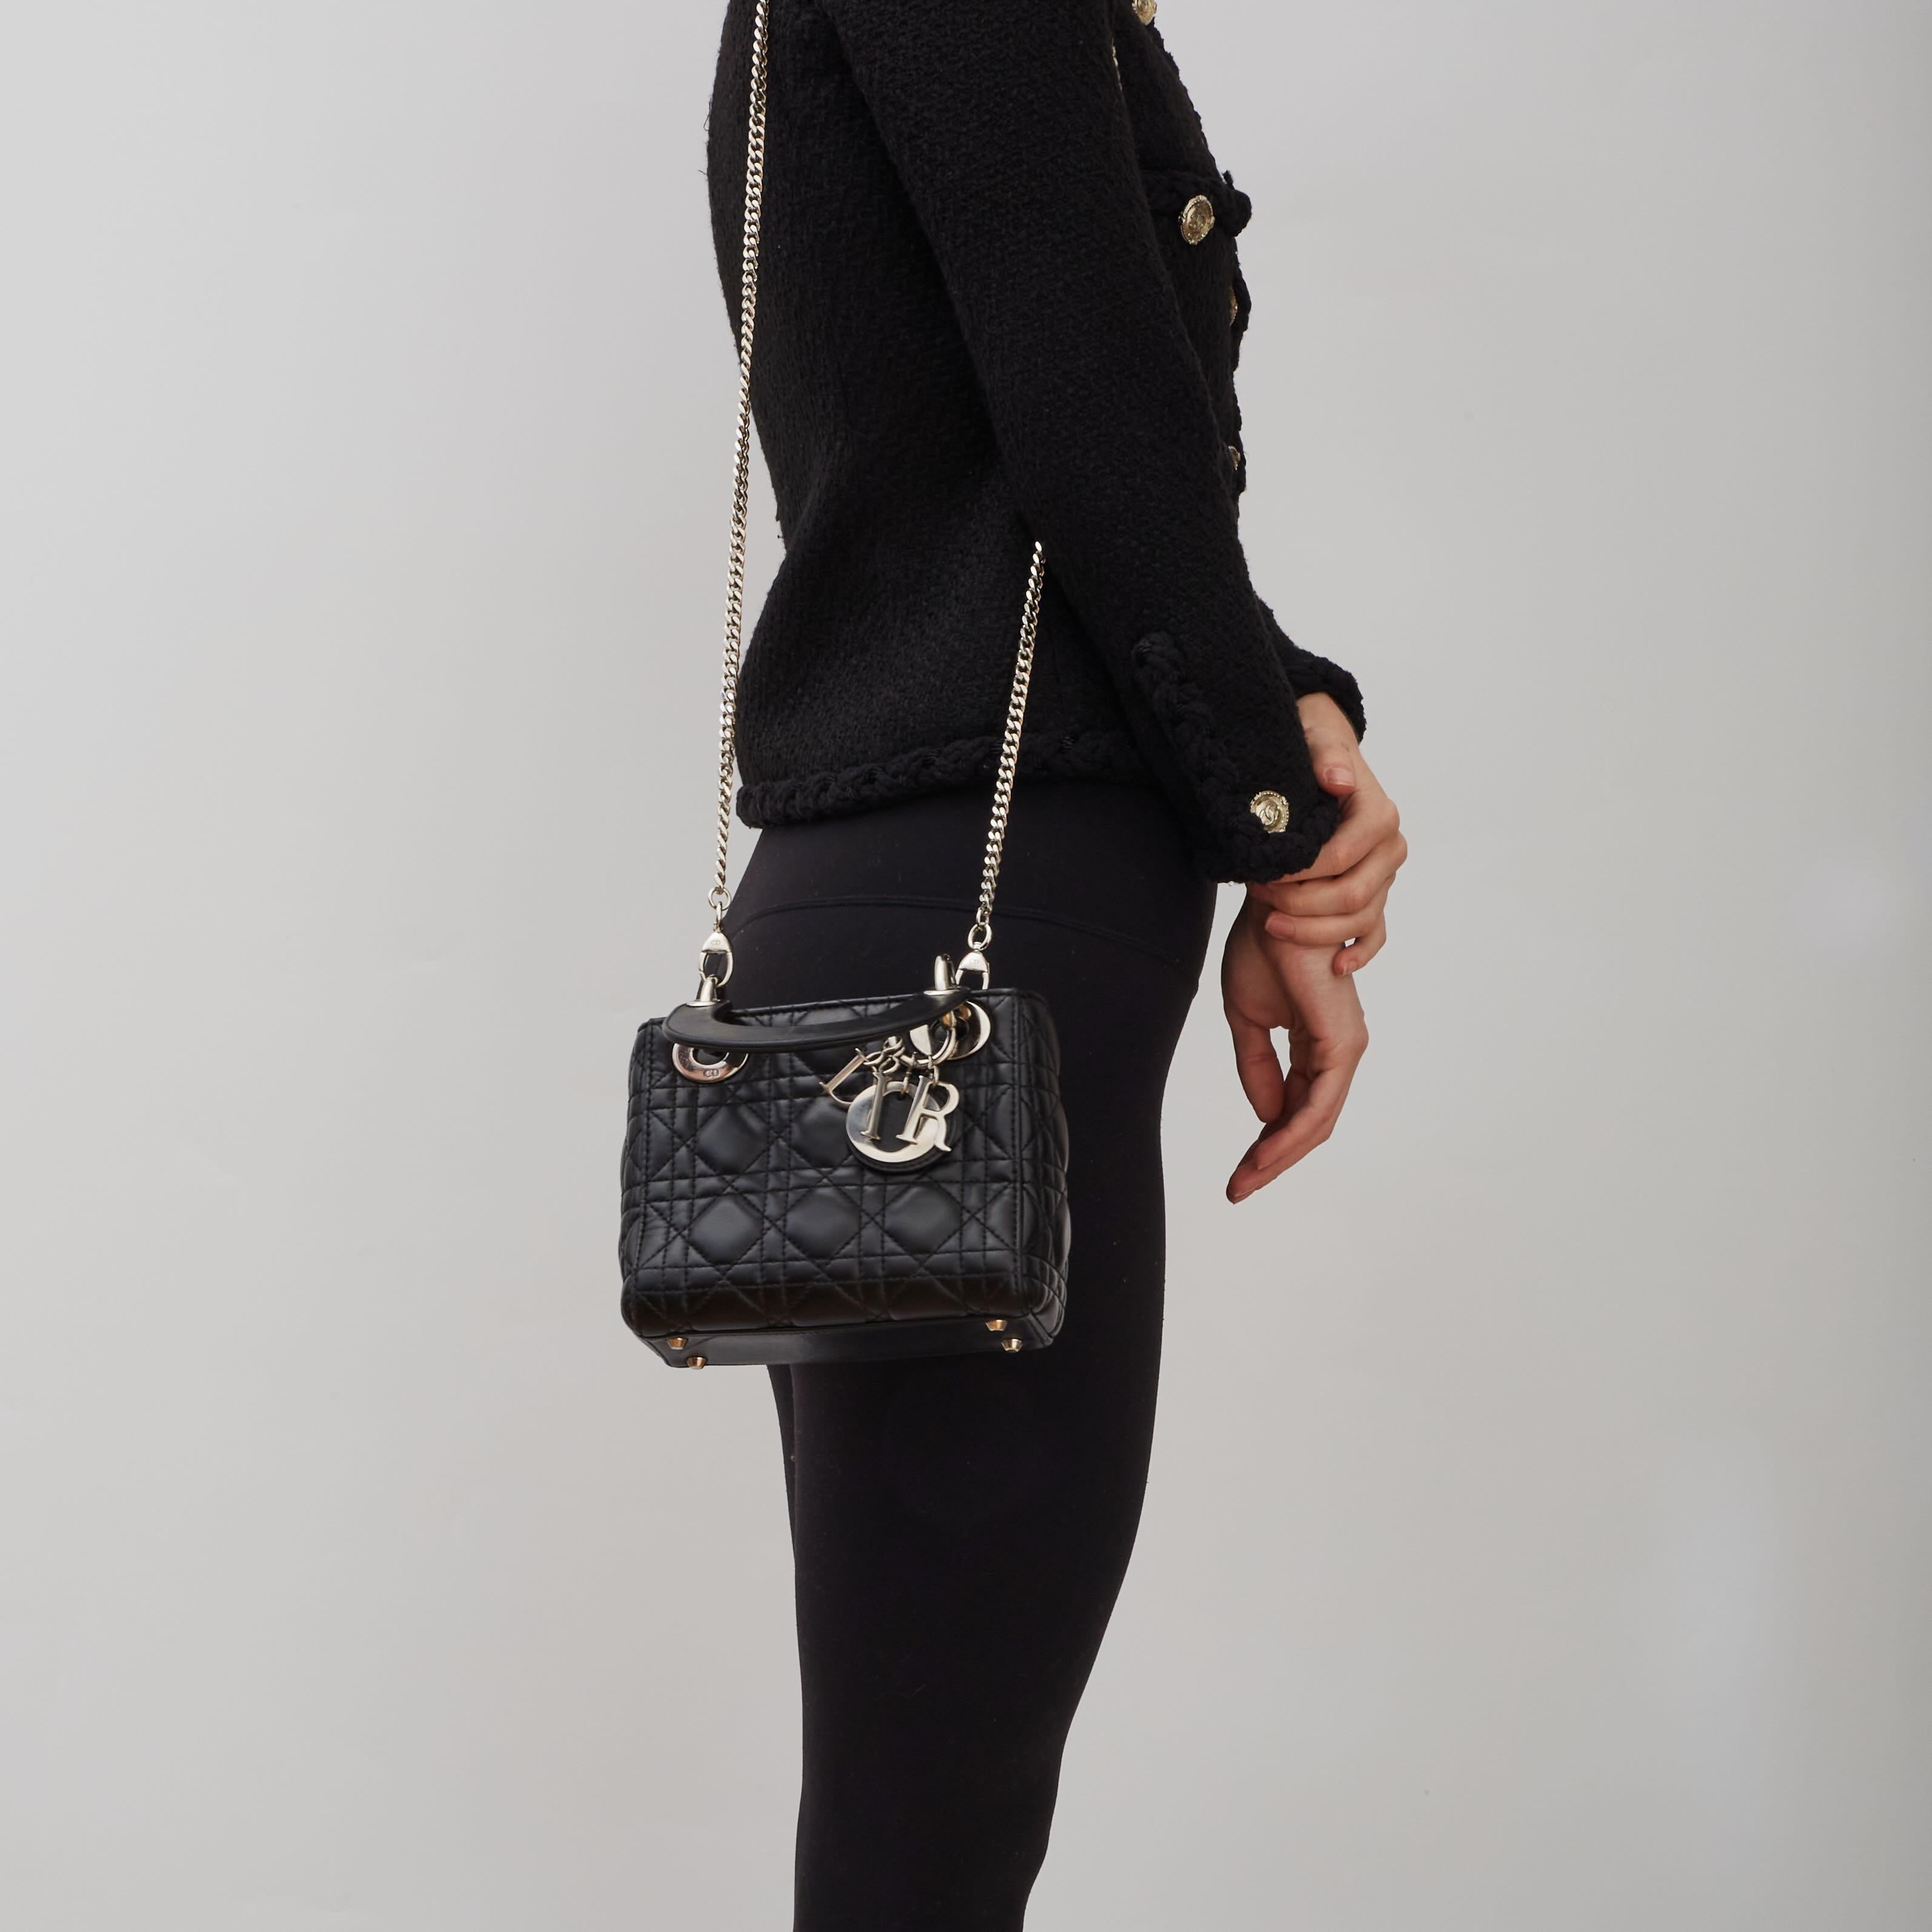 Dior Black Leather Cannage Lady Bag (2019) 7